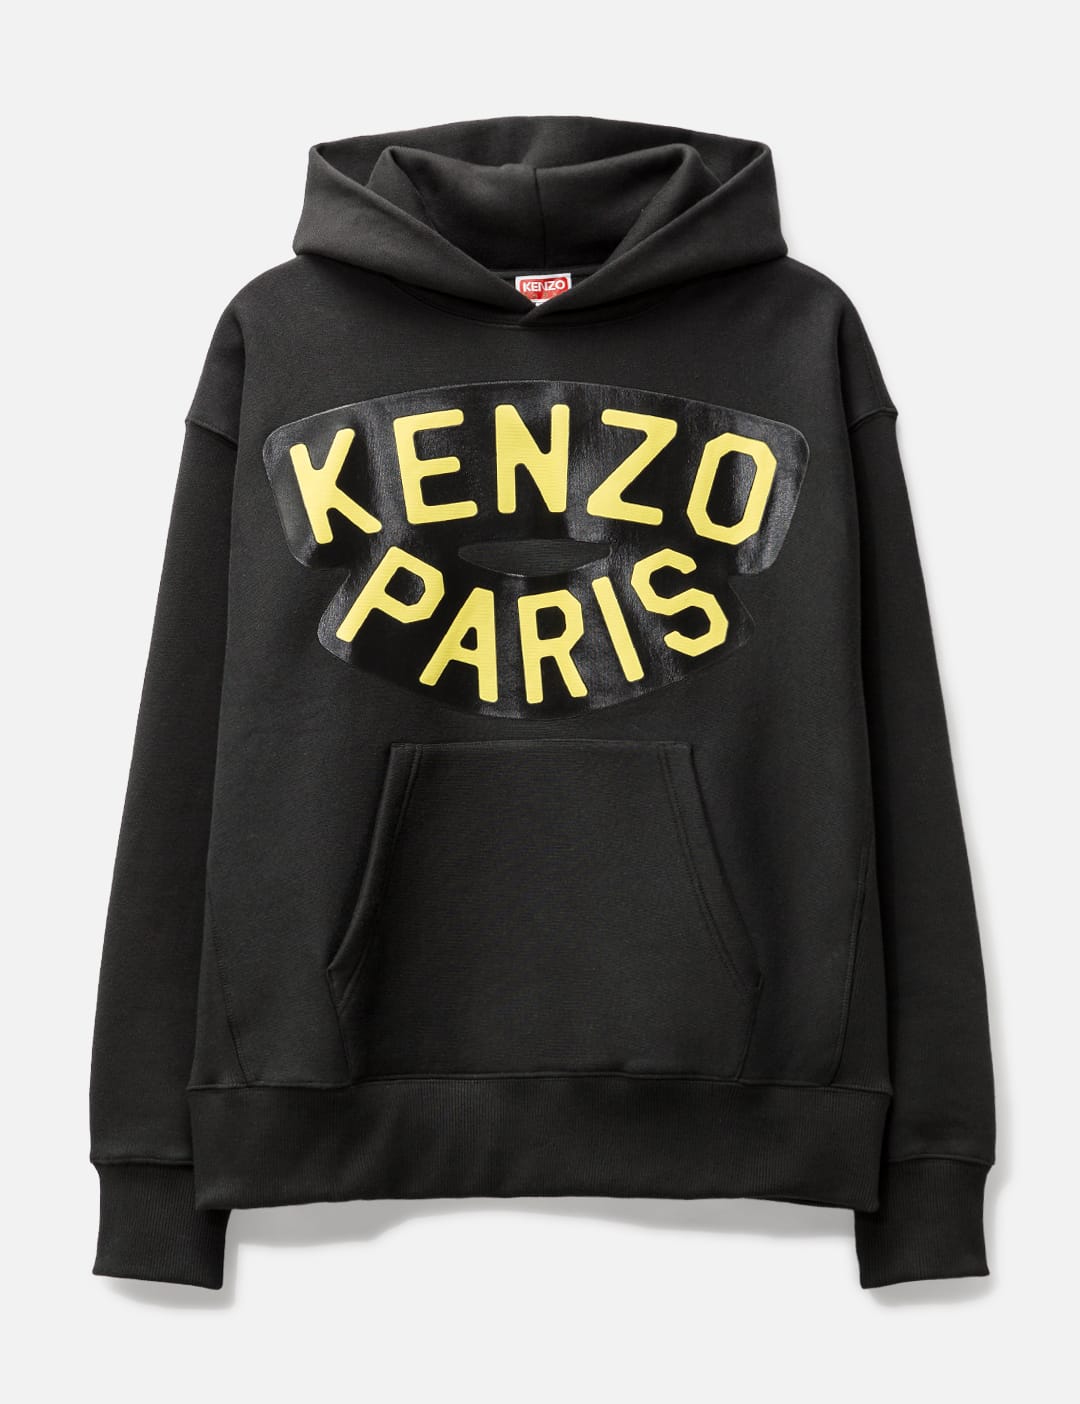 Kenzo Sailor Hoodie Sweatshirt